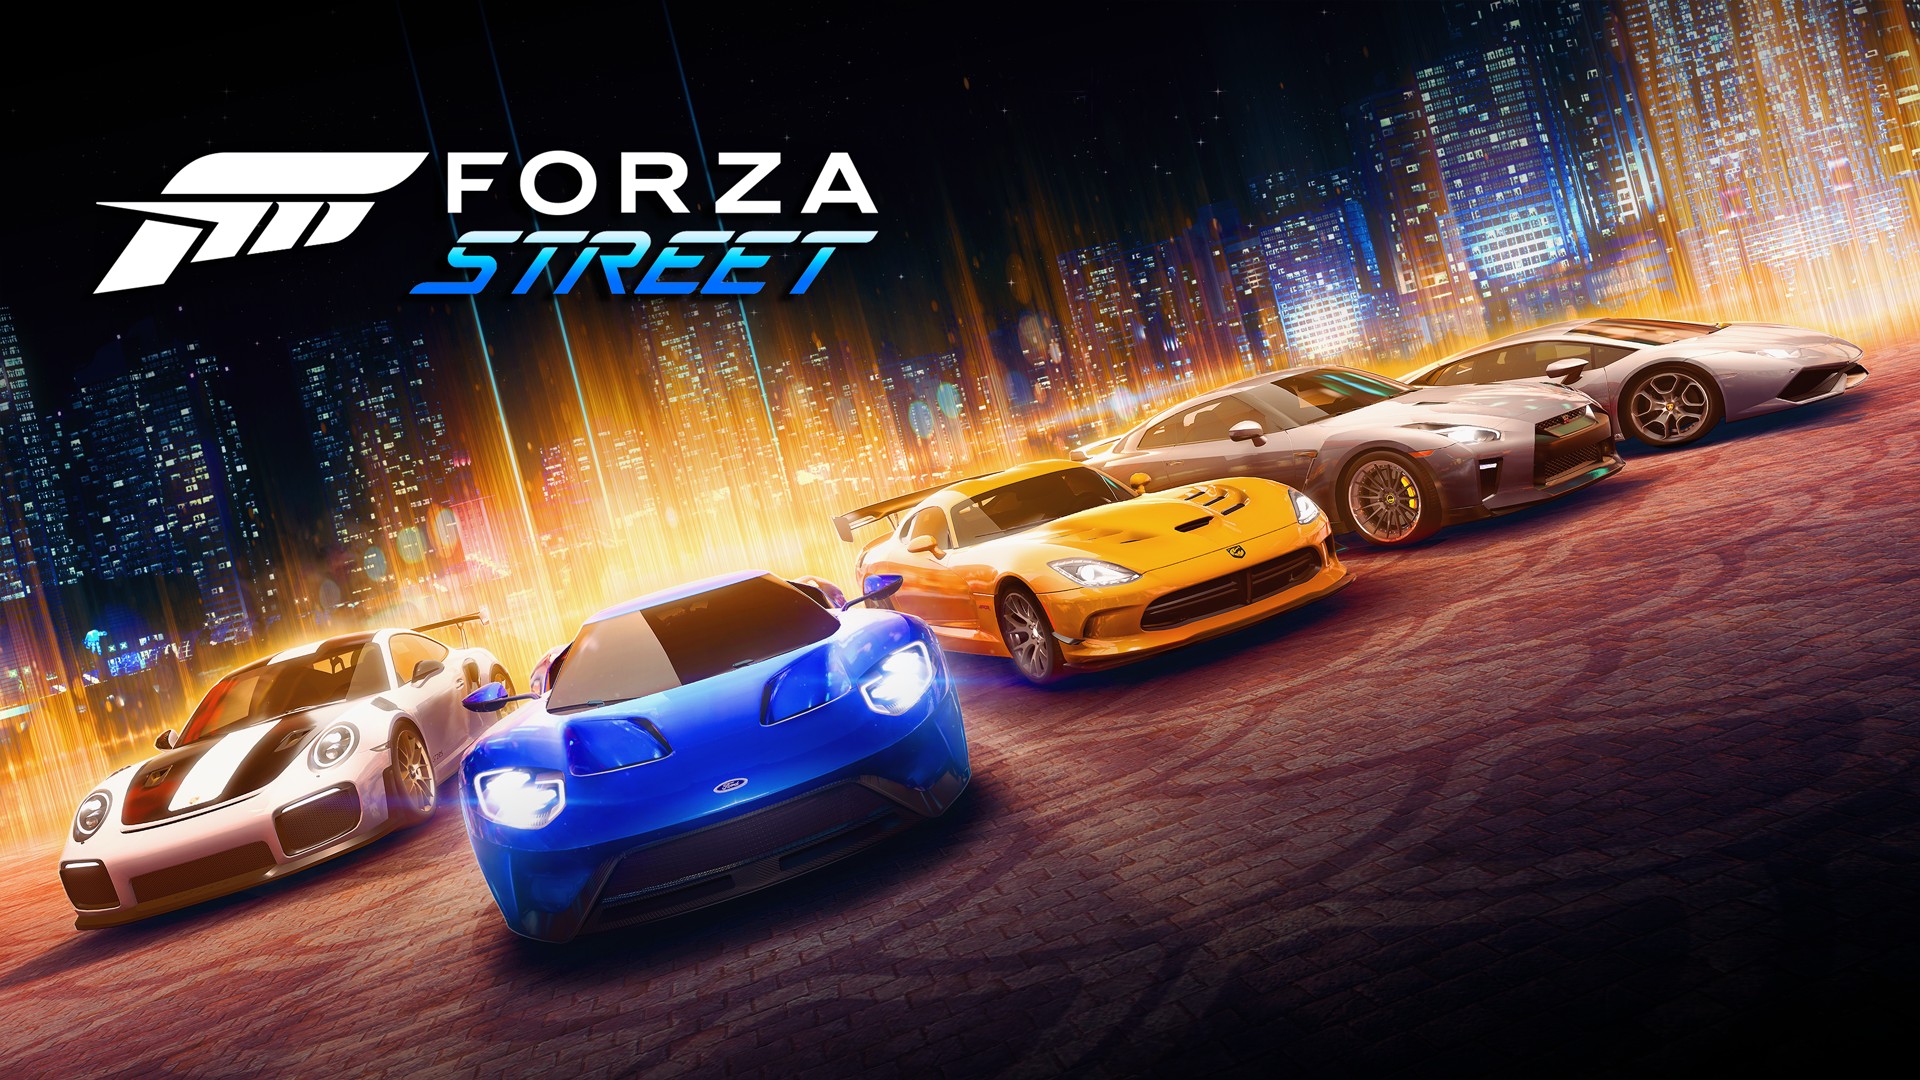 Video For Forza Street est disponible sur iOS et Android